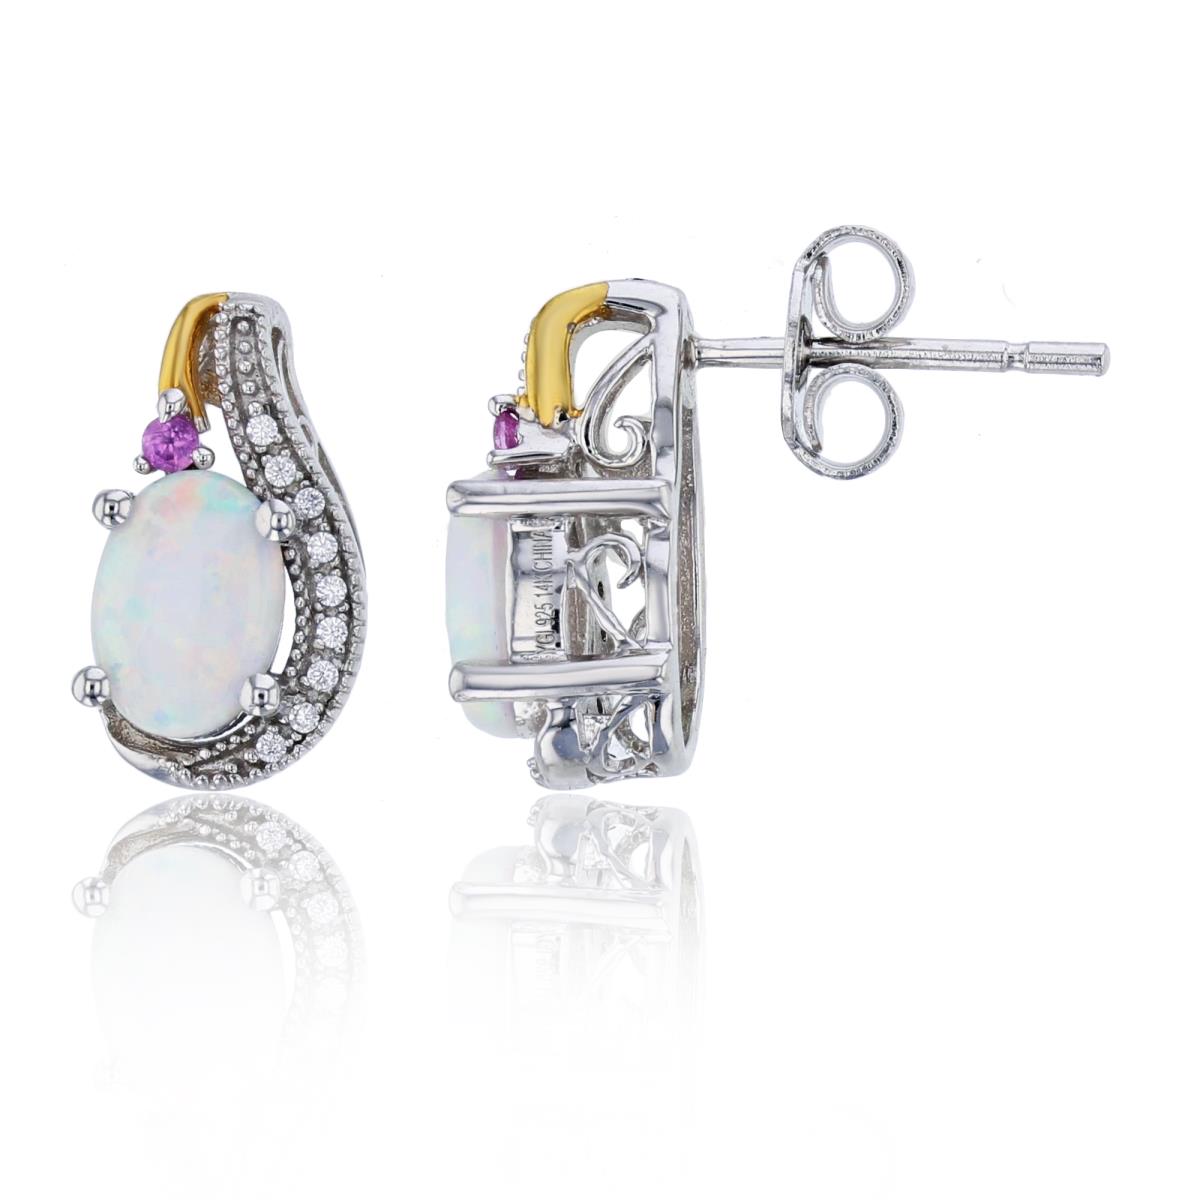 14K Yellow Gold & Sterling Silver Rhodium 0.06 CTTW Rnd Diamonds & Ov Created Opal/Pink Sapphire Stud Earring